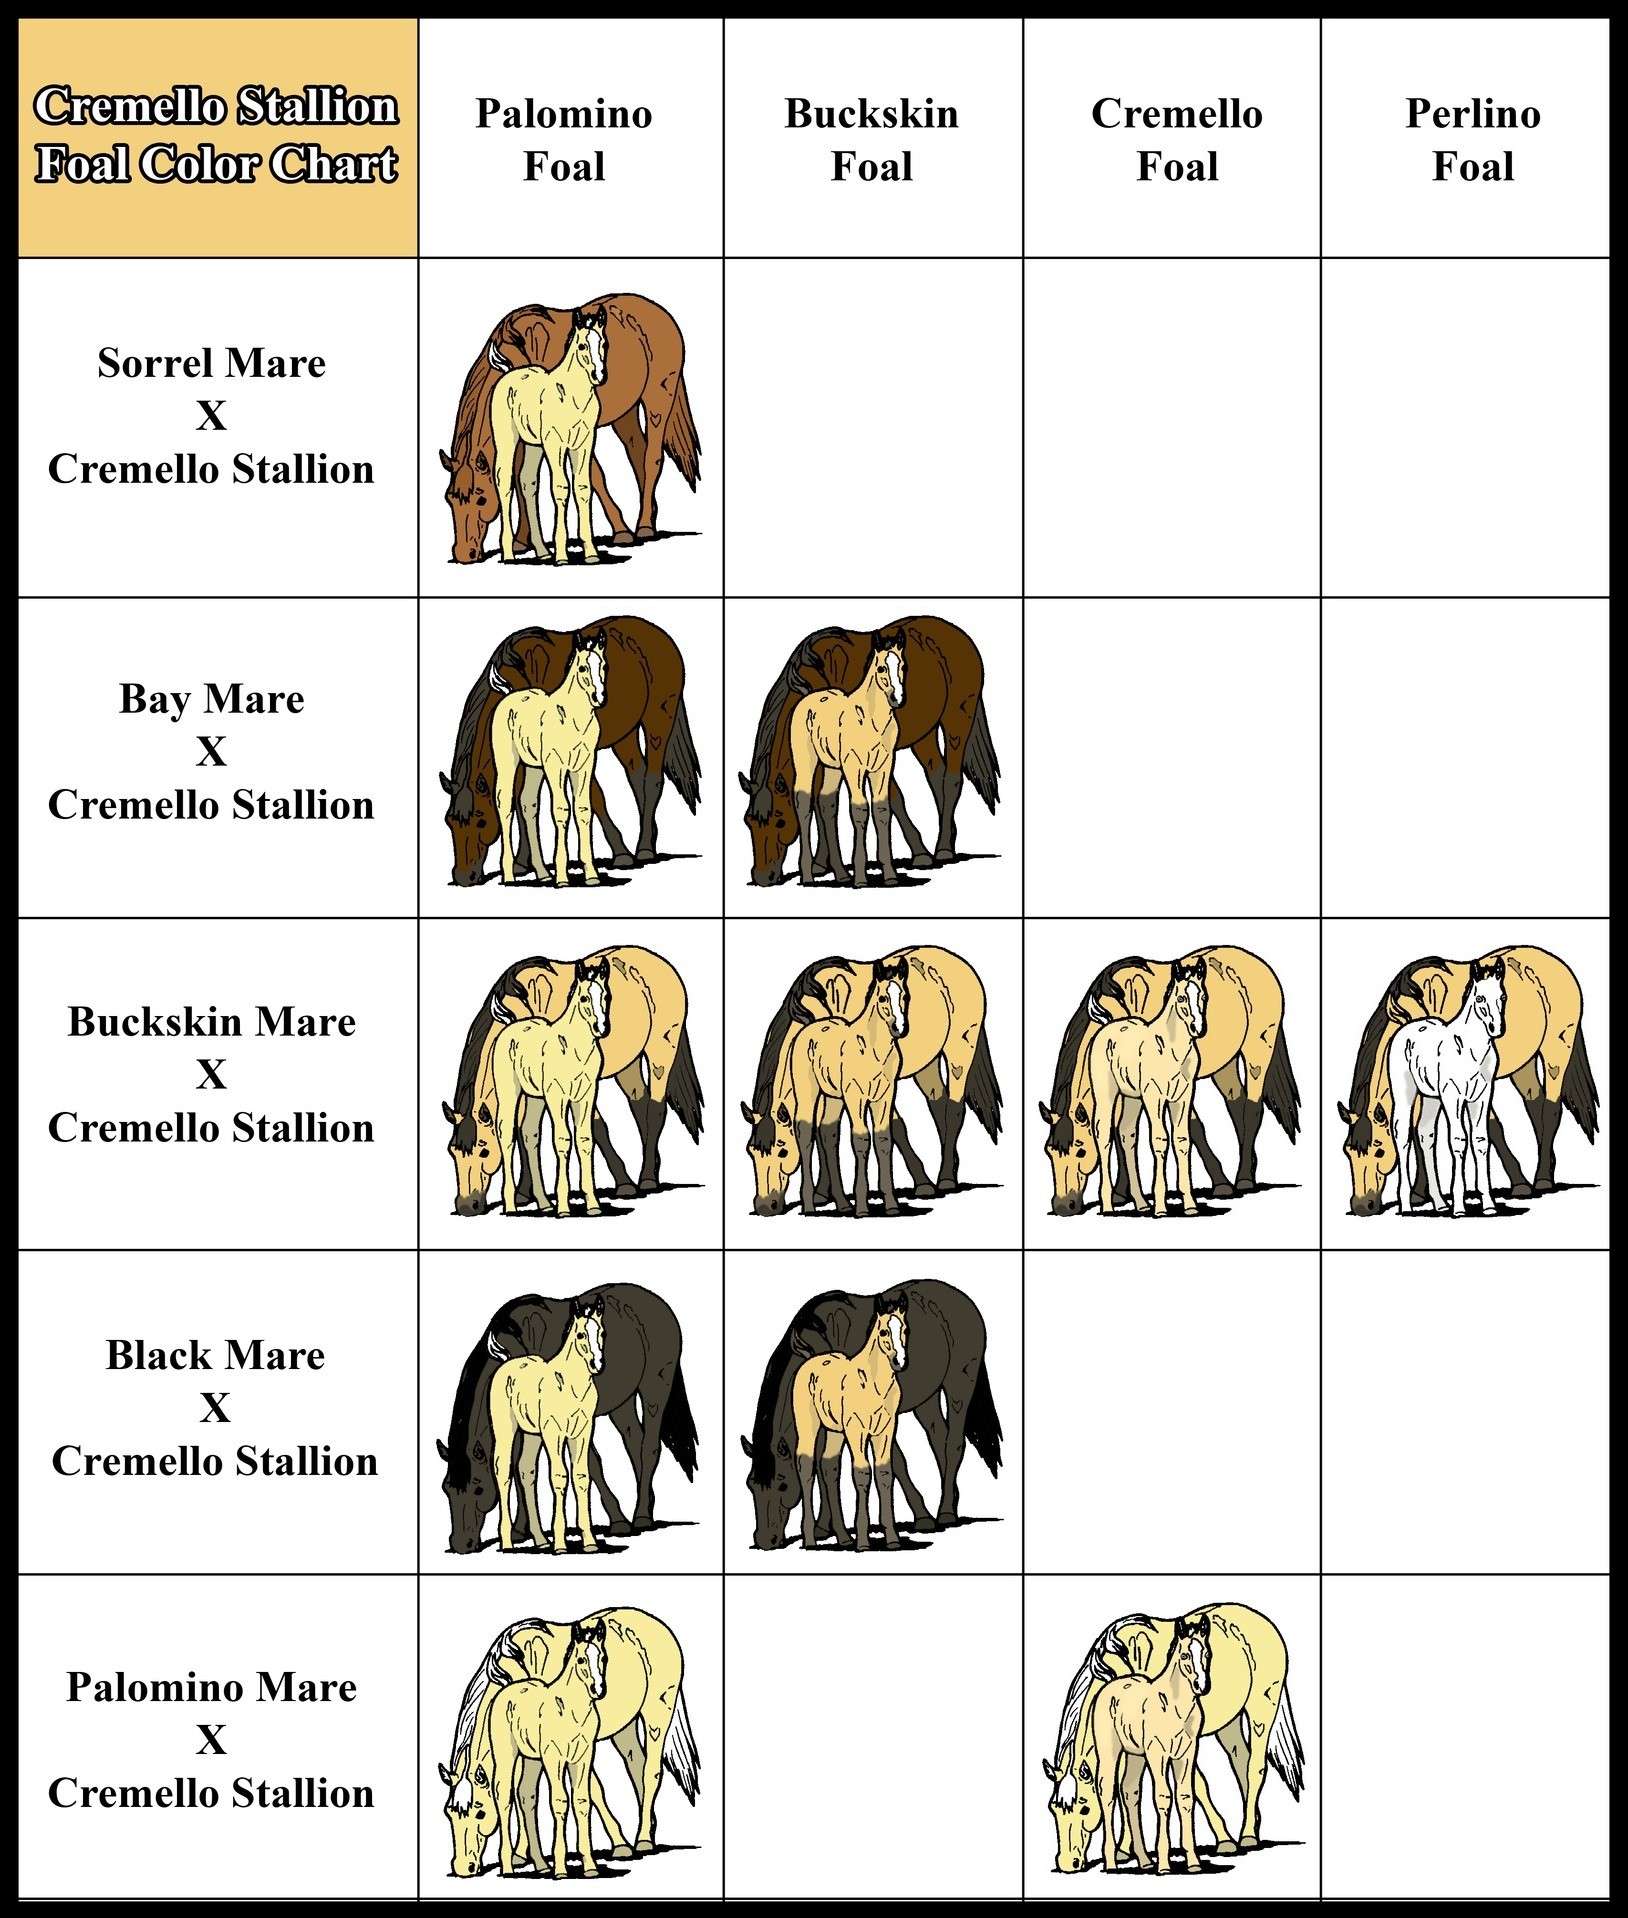 Cremello Cross Color Chart - Foal Color Chart